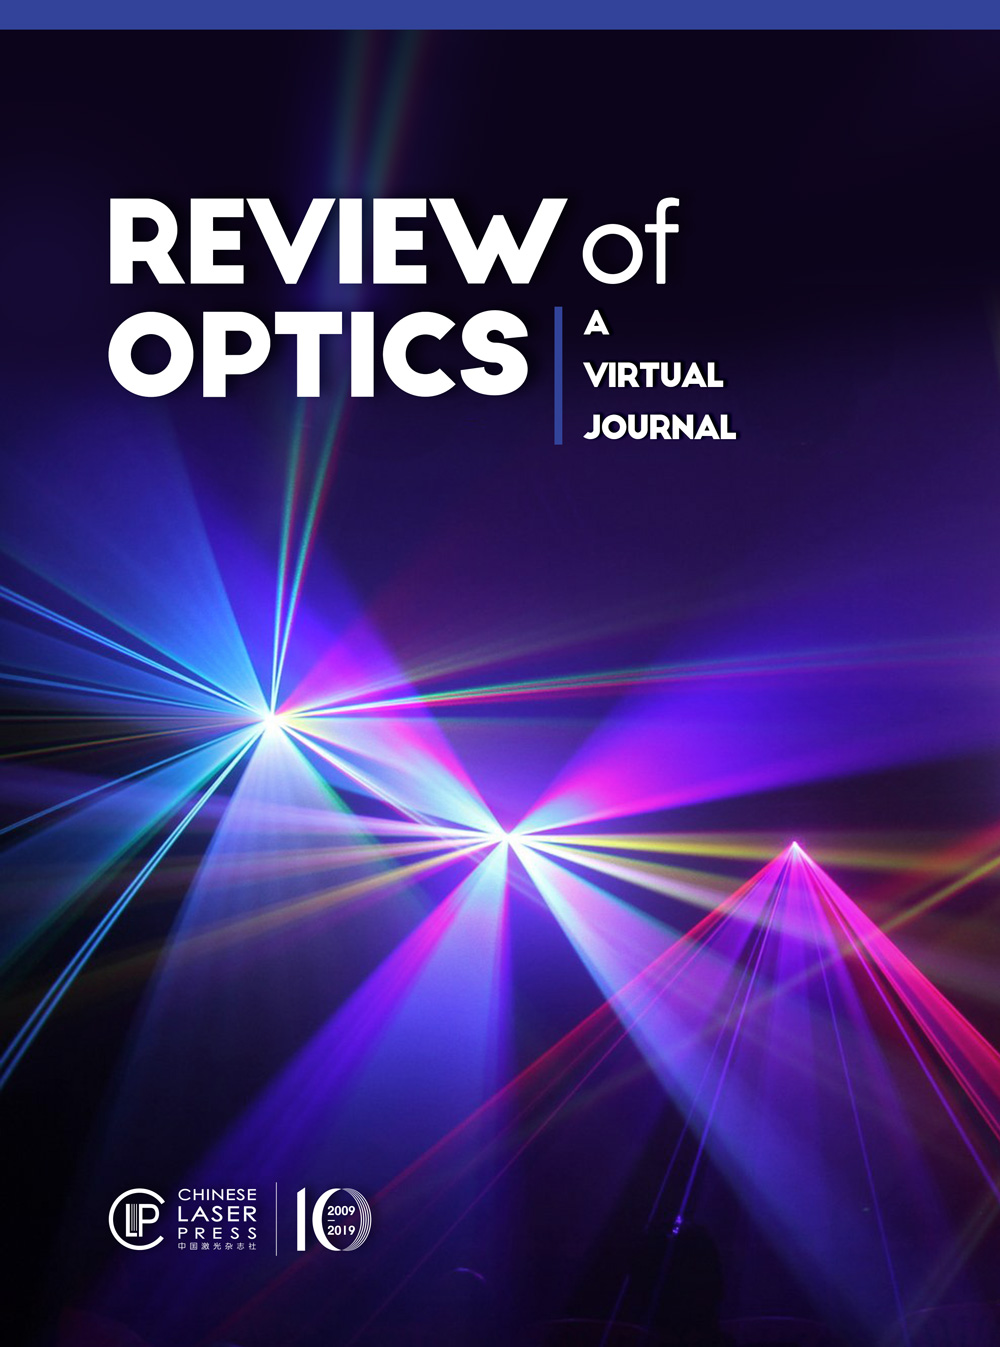 Review of Optics: a virtual journal